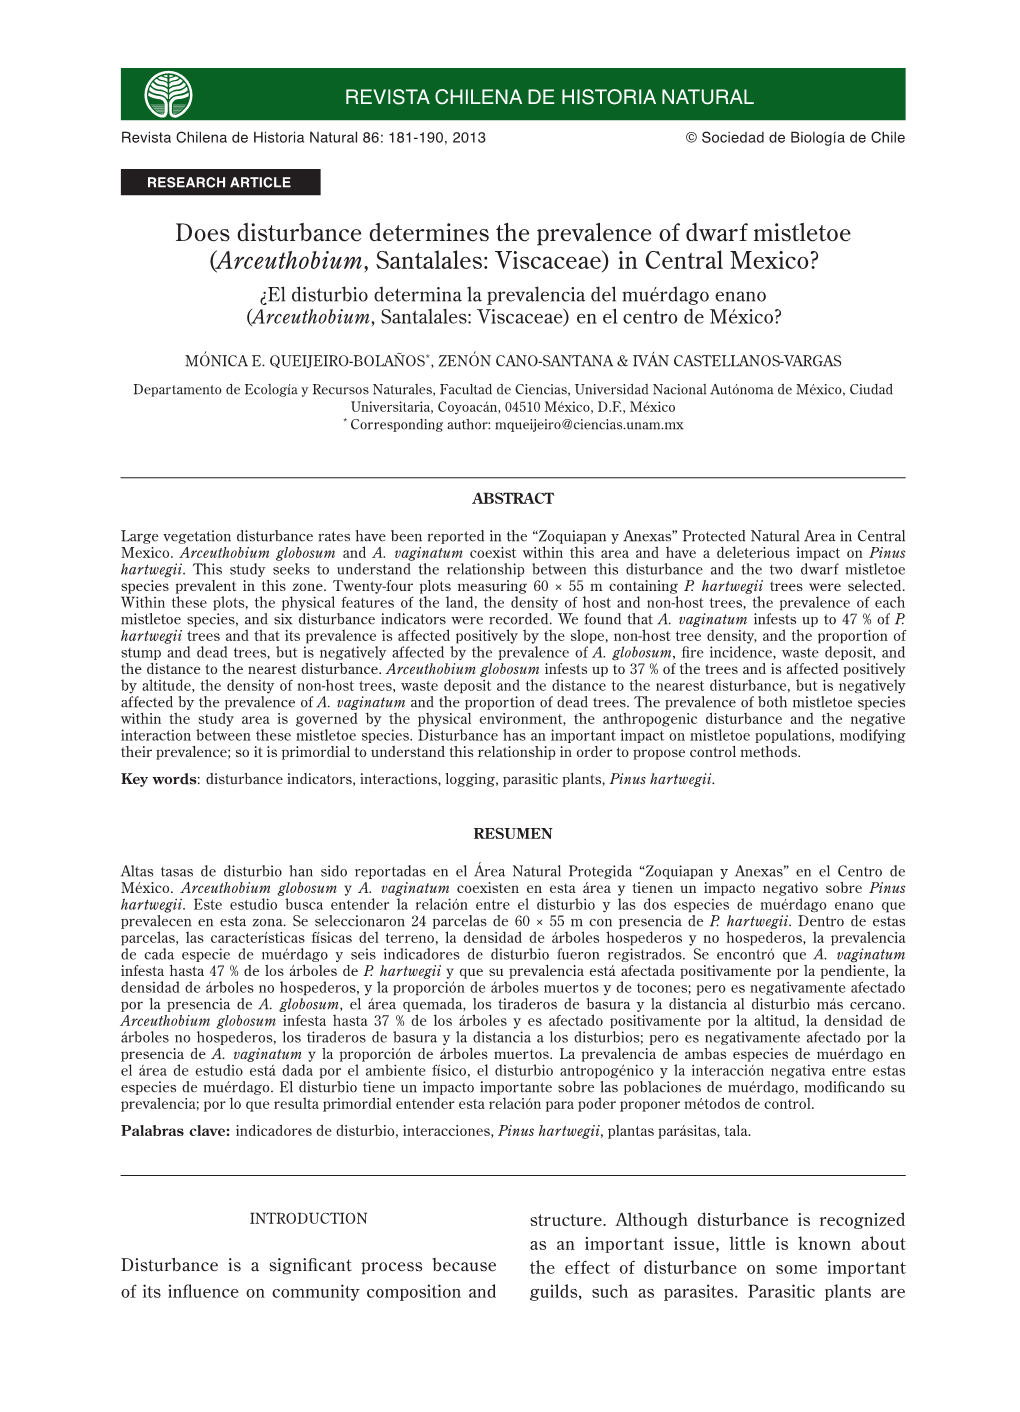 Does Disturbance Determines the Prevalence of Dwarf Mistletoe